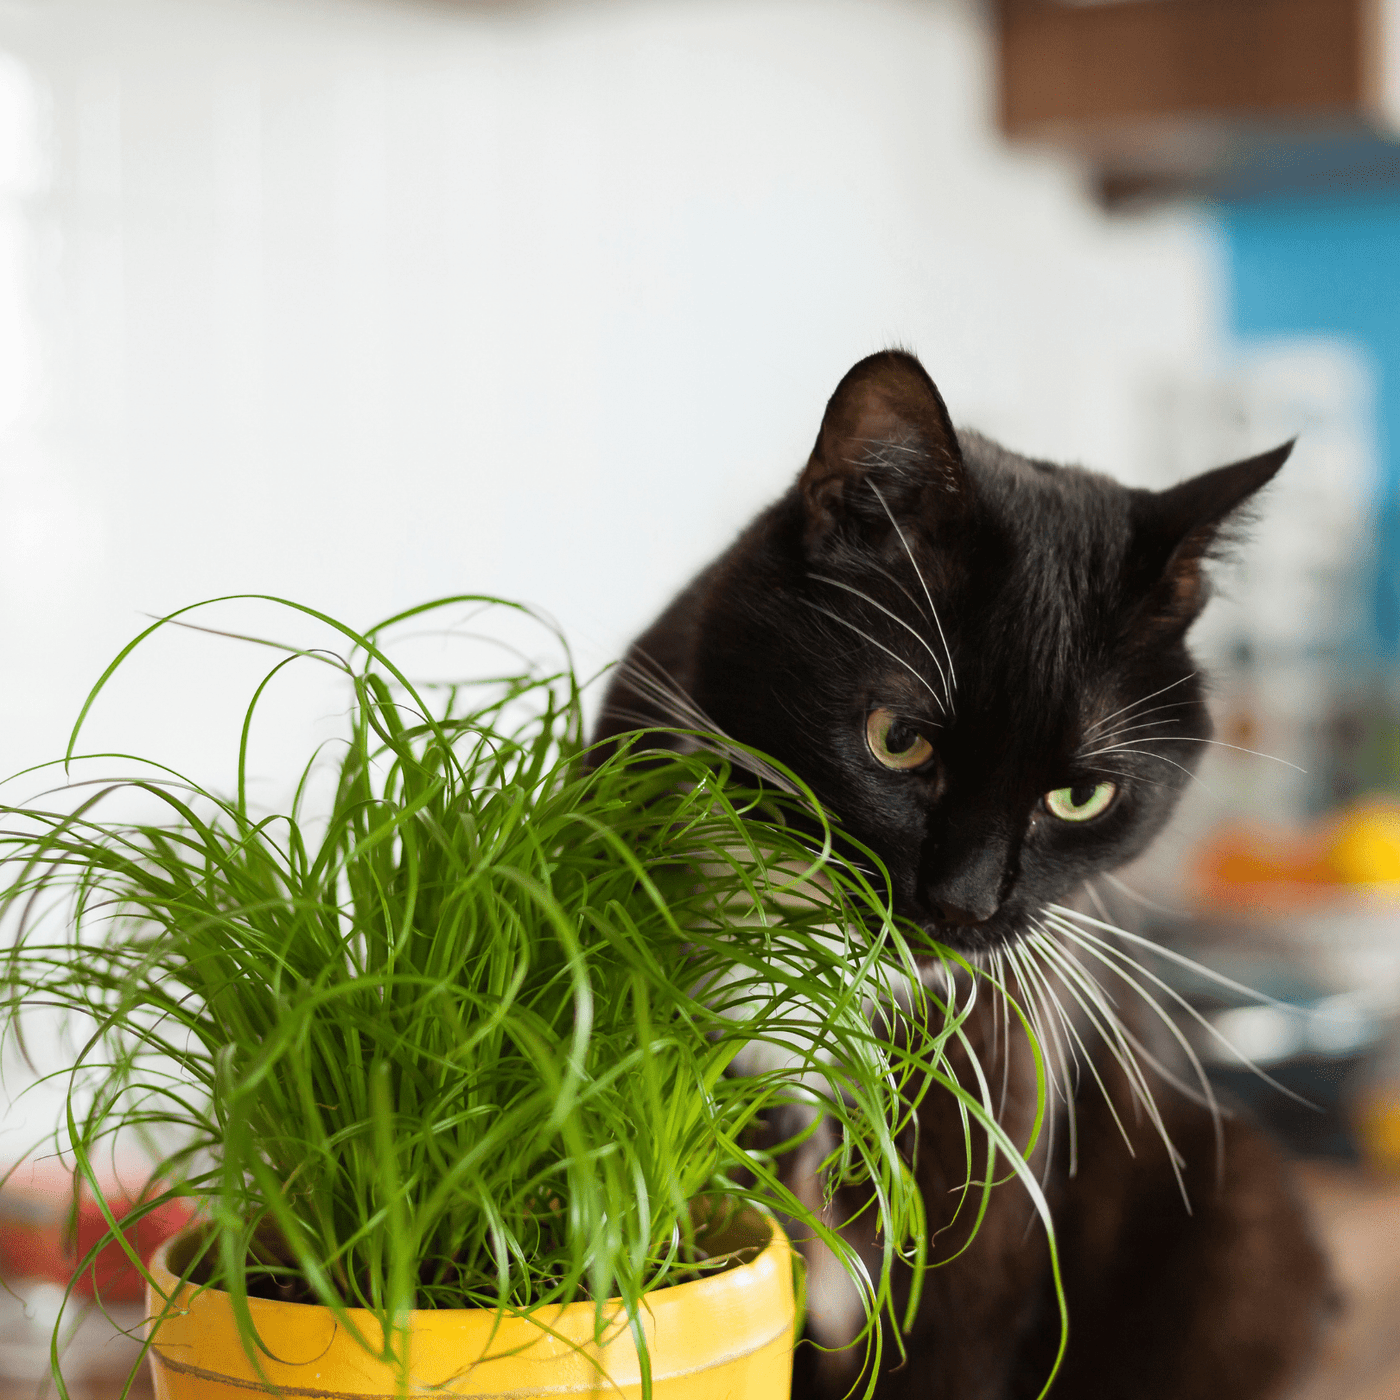 Organic Cat Grass Blend - Cornucopia Seeds